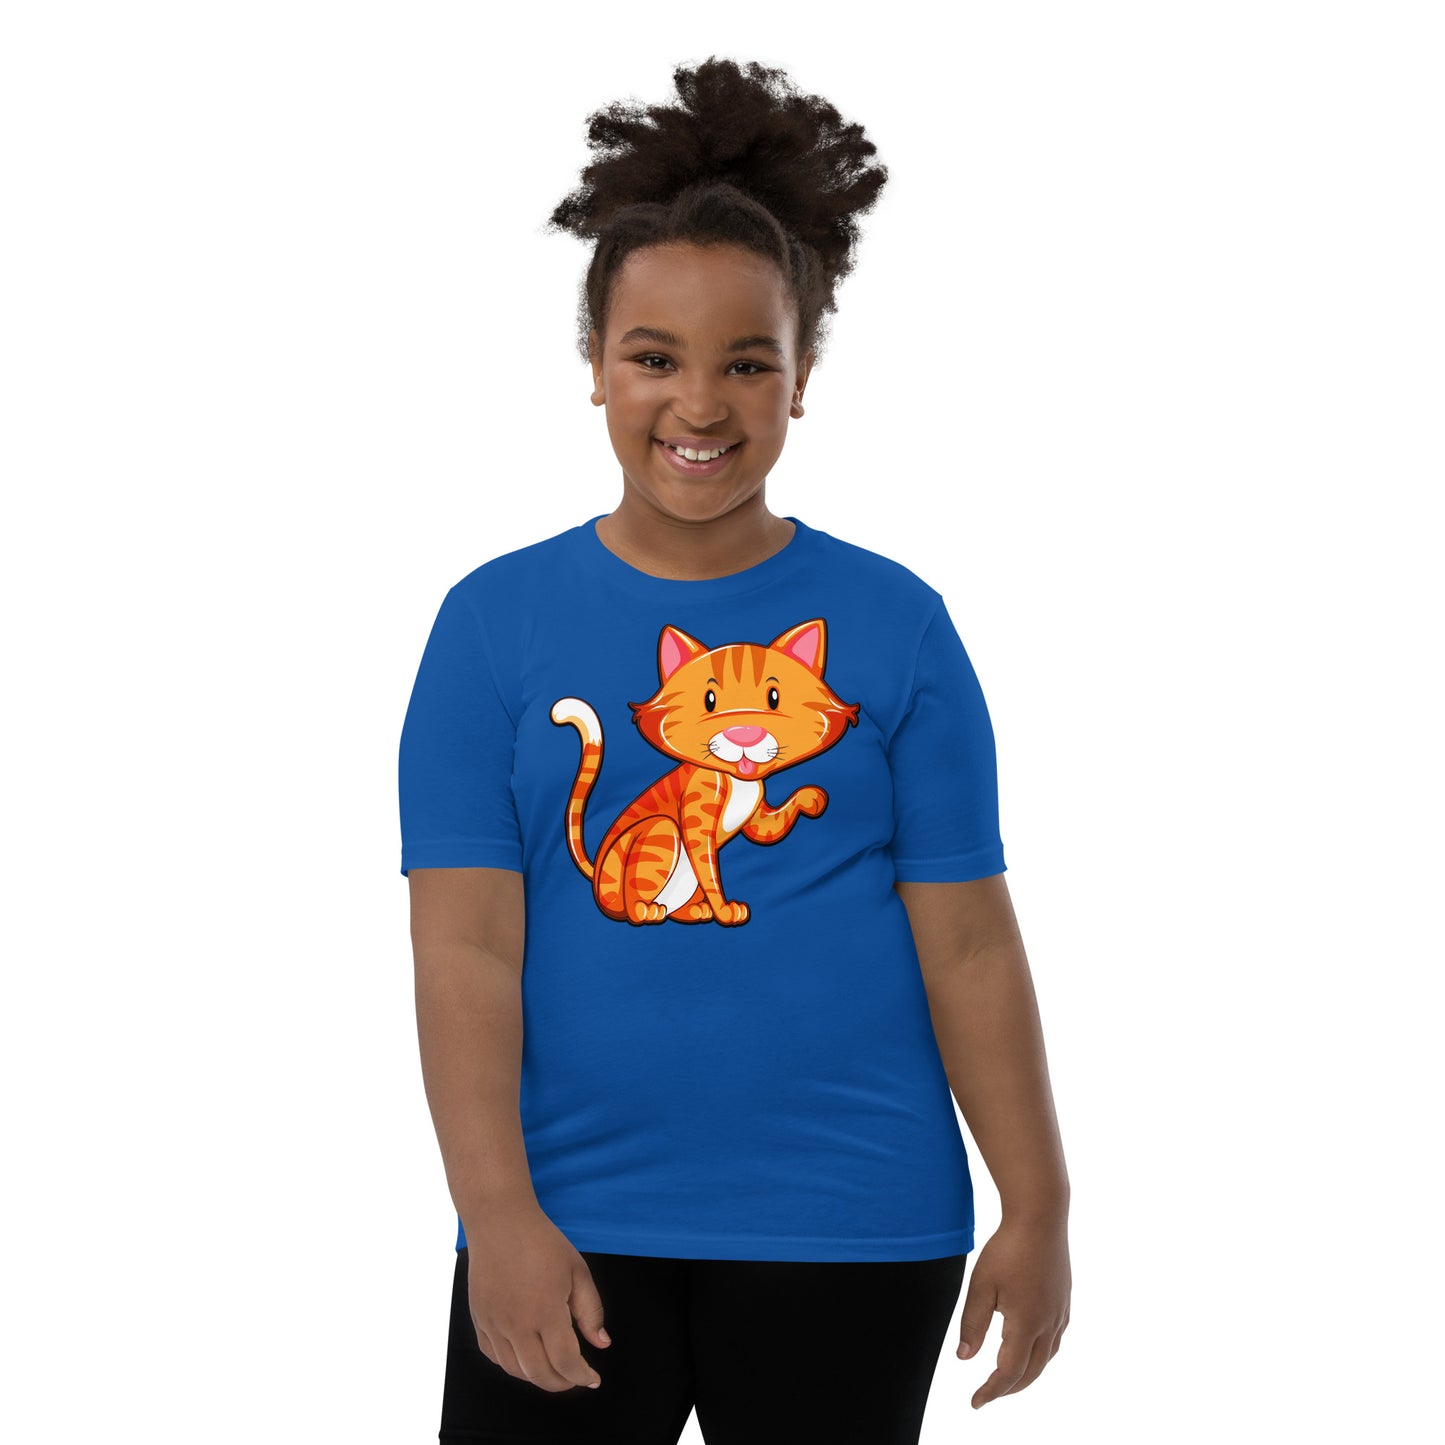 Cute Cat T-shirt, No. 0173